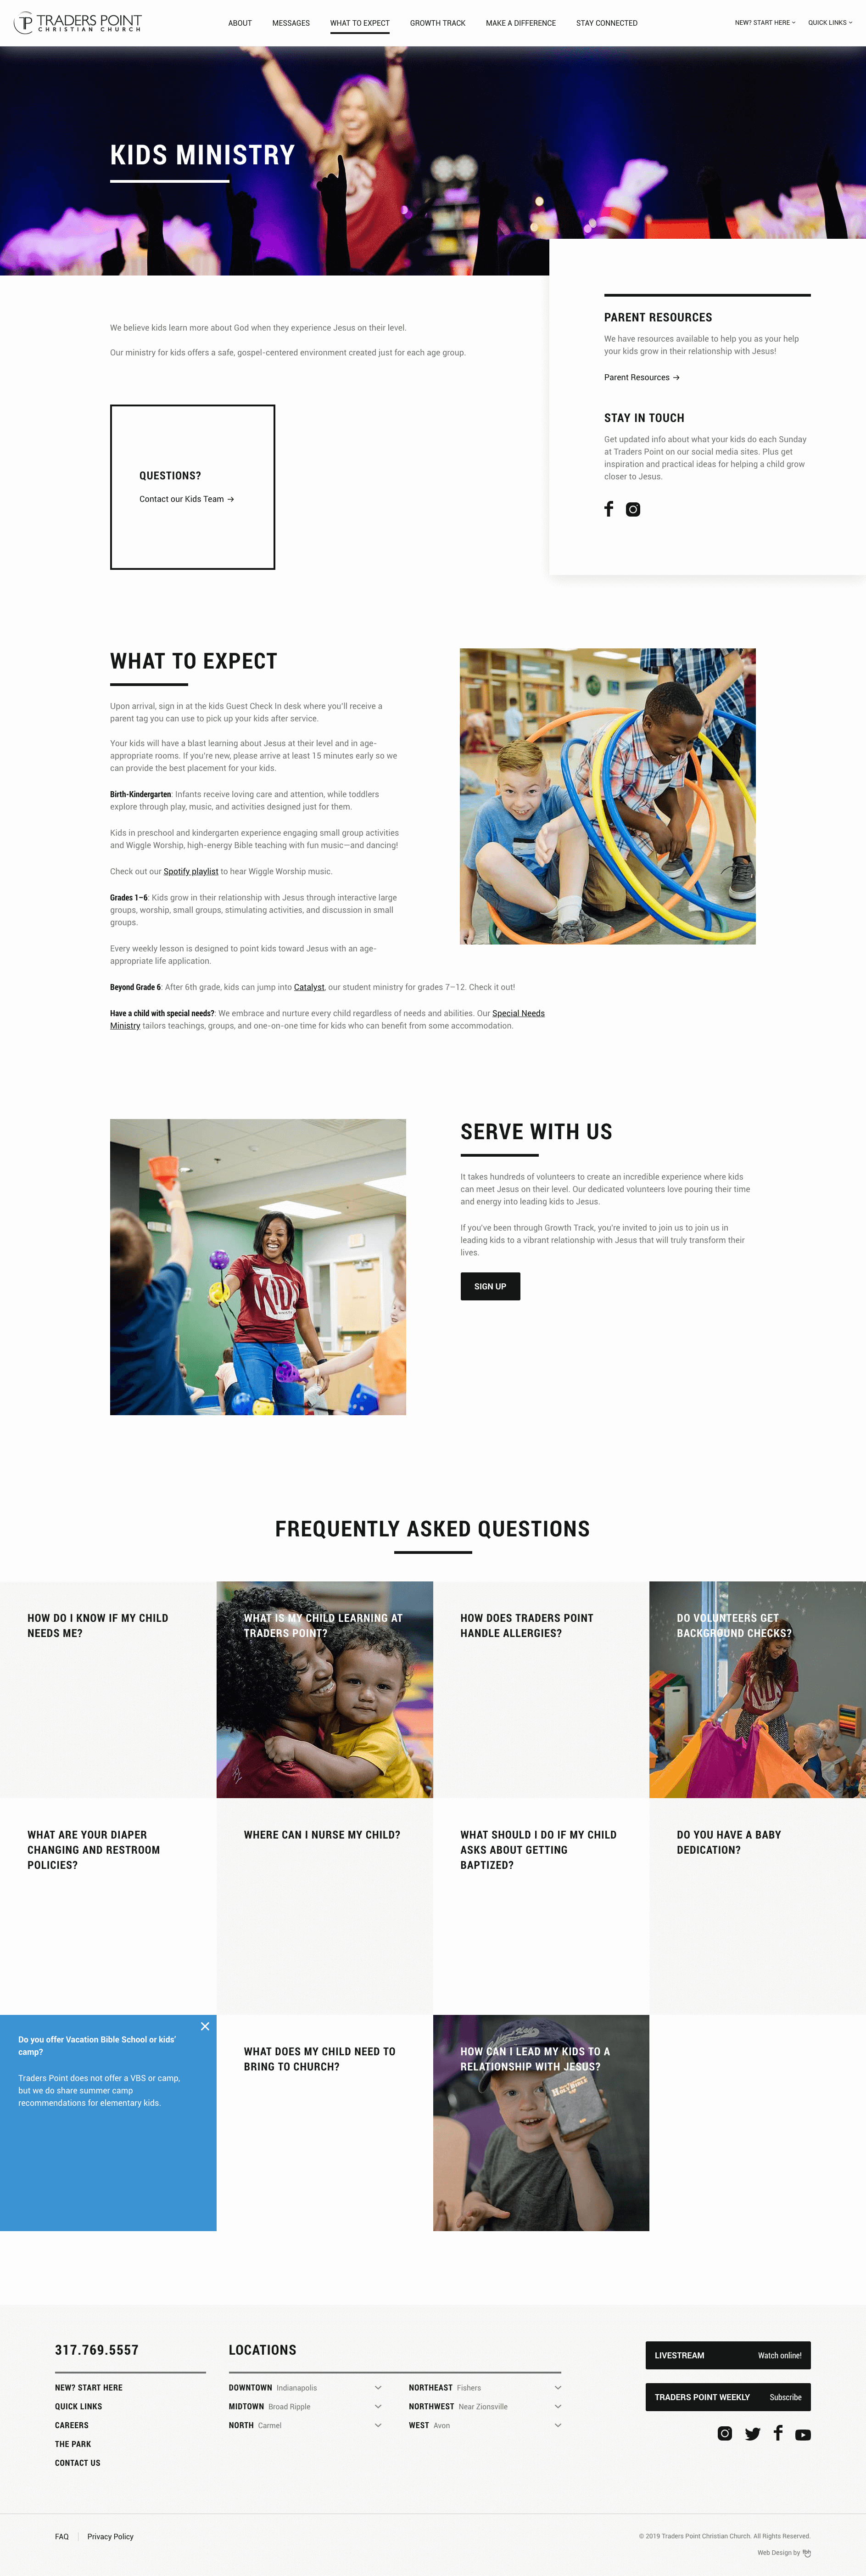 Kids Ministry web page